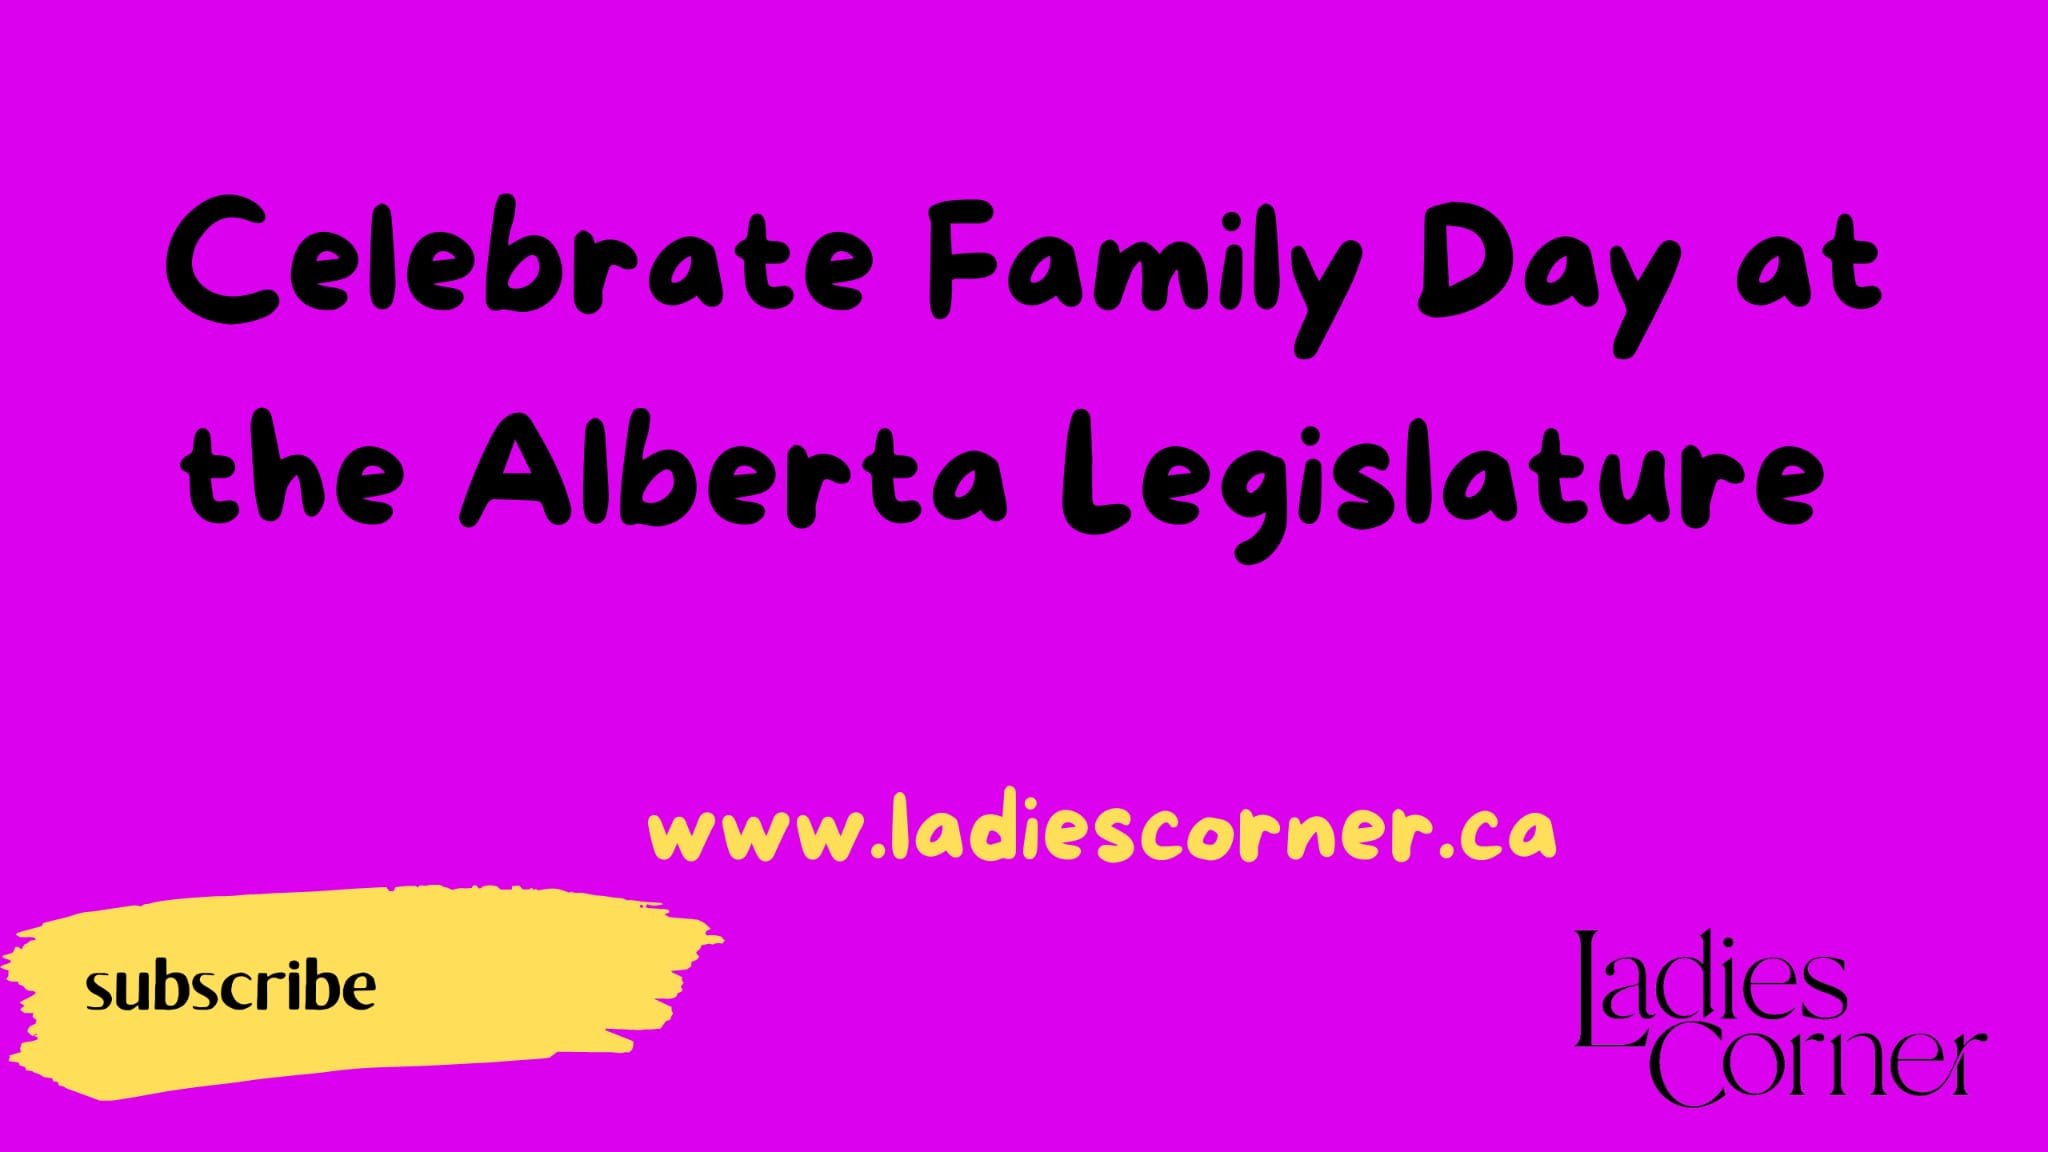 Celebrate Family Day at the Alberta Legislature